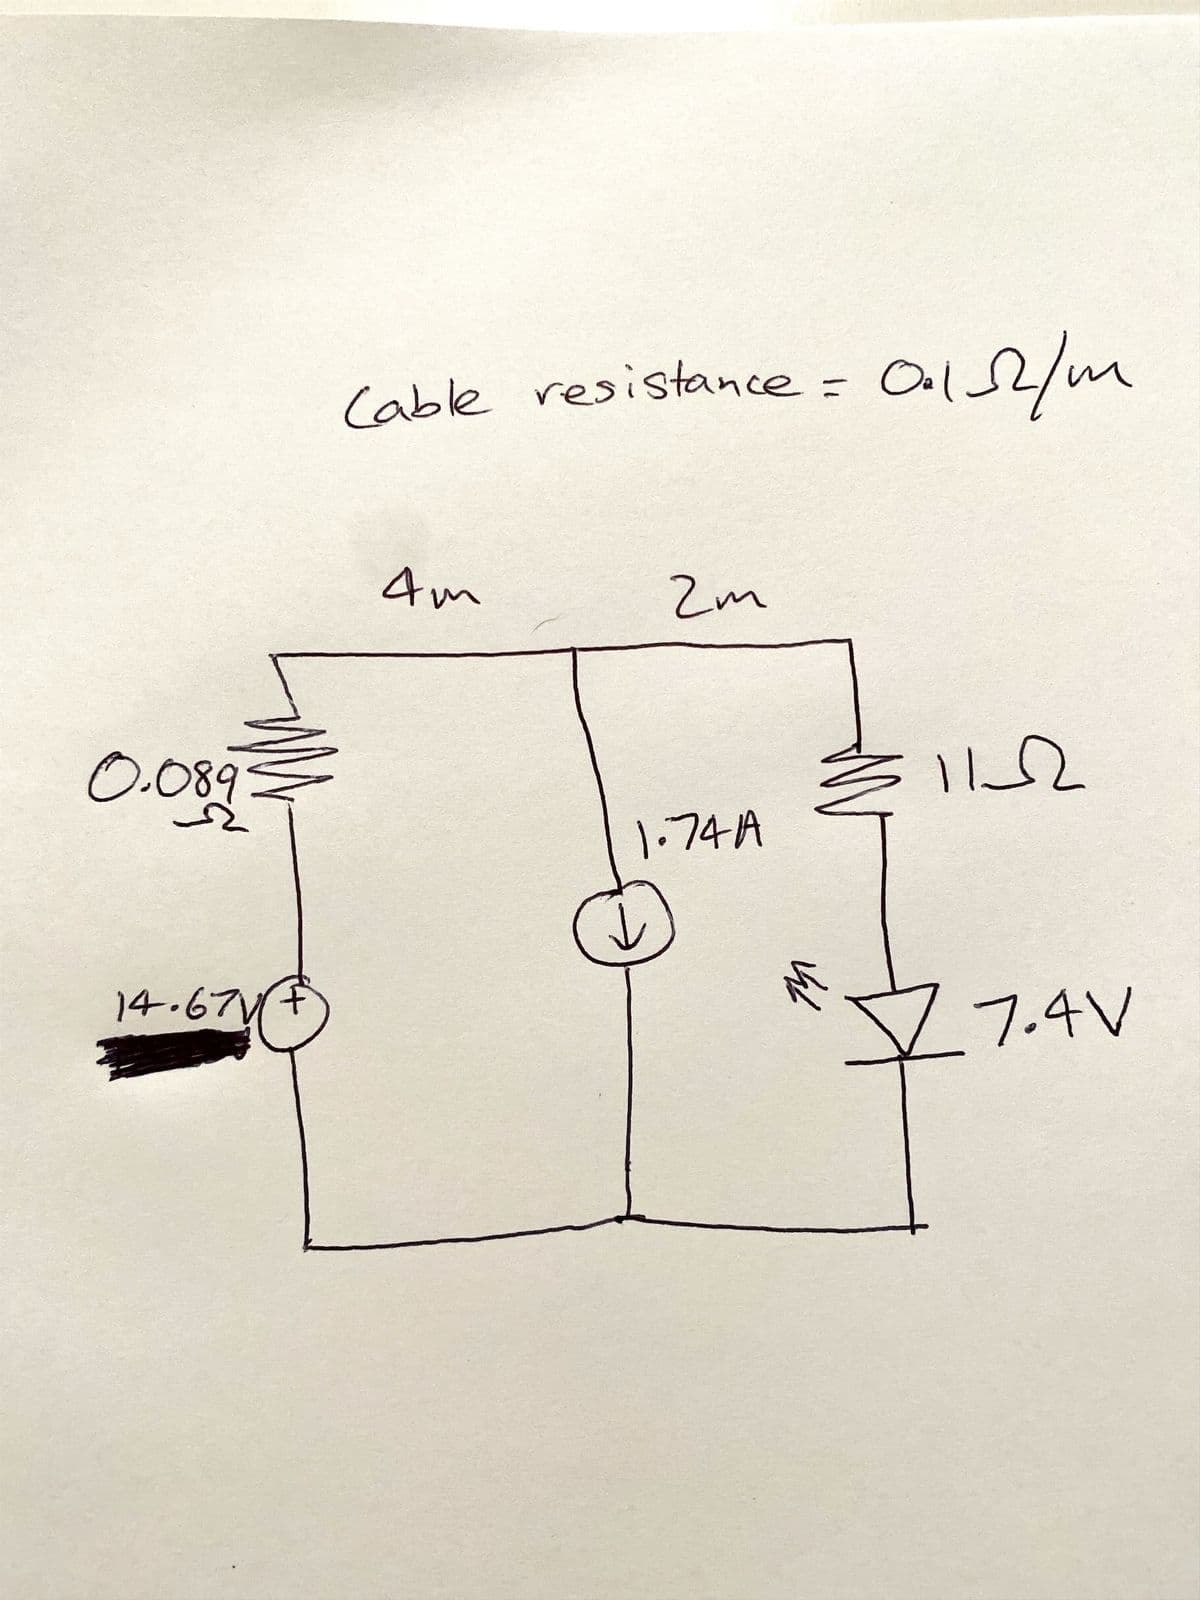 0.0893
14.67V/F
Cable resistance =
4m
2m
1.74A
M
01152/1
112
7.4V